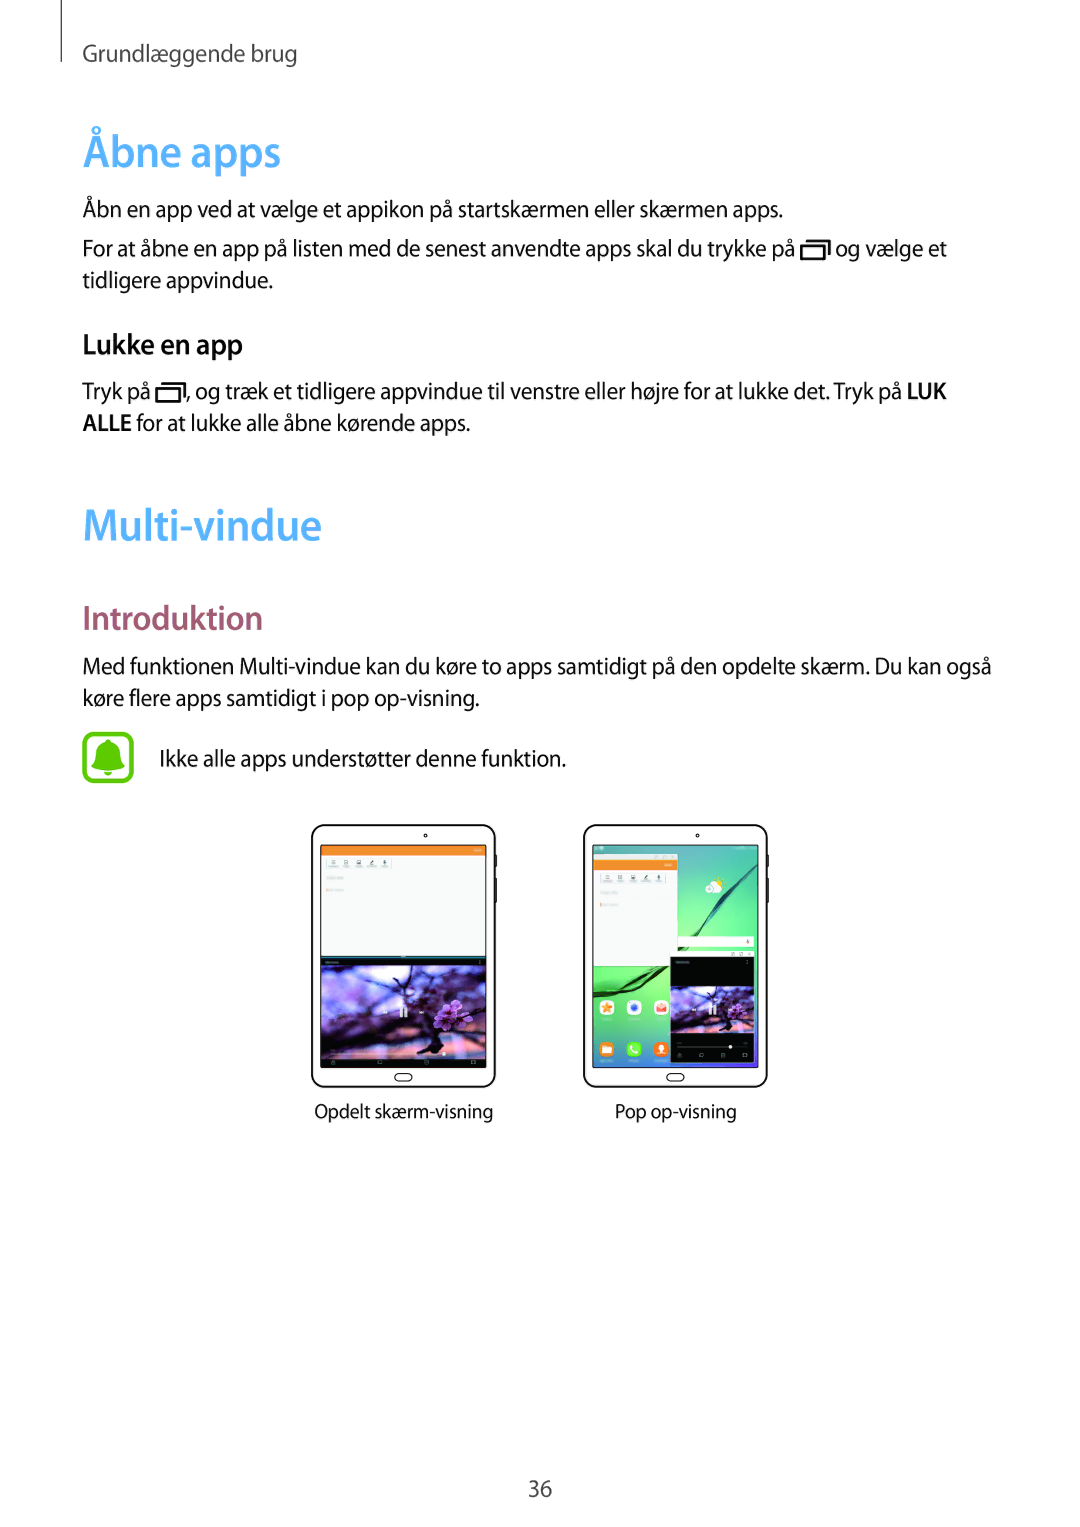 Samsung SM-T719NZWENEE, SM-T719NZKENEE, SM-T819NZKENEE, SM-T819NZWENEE Åbne apps, Multi-vindue, Introduktion, Lukke en app 